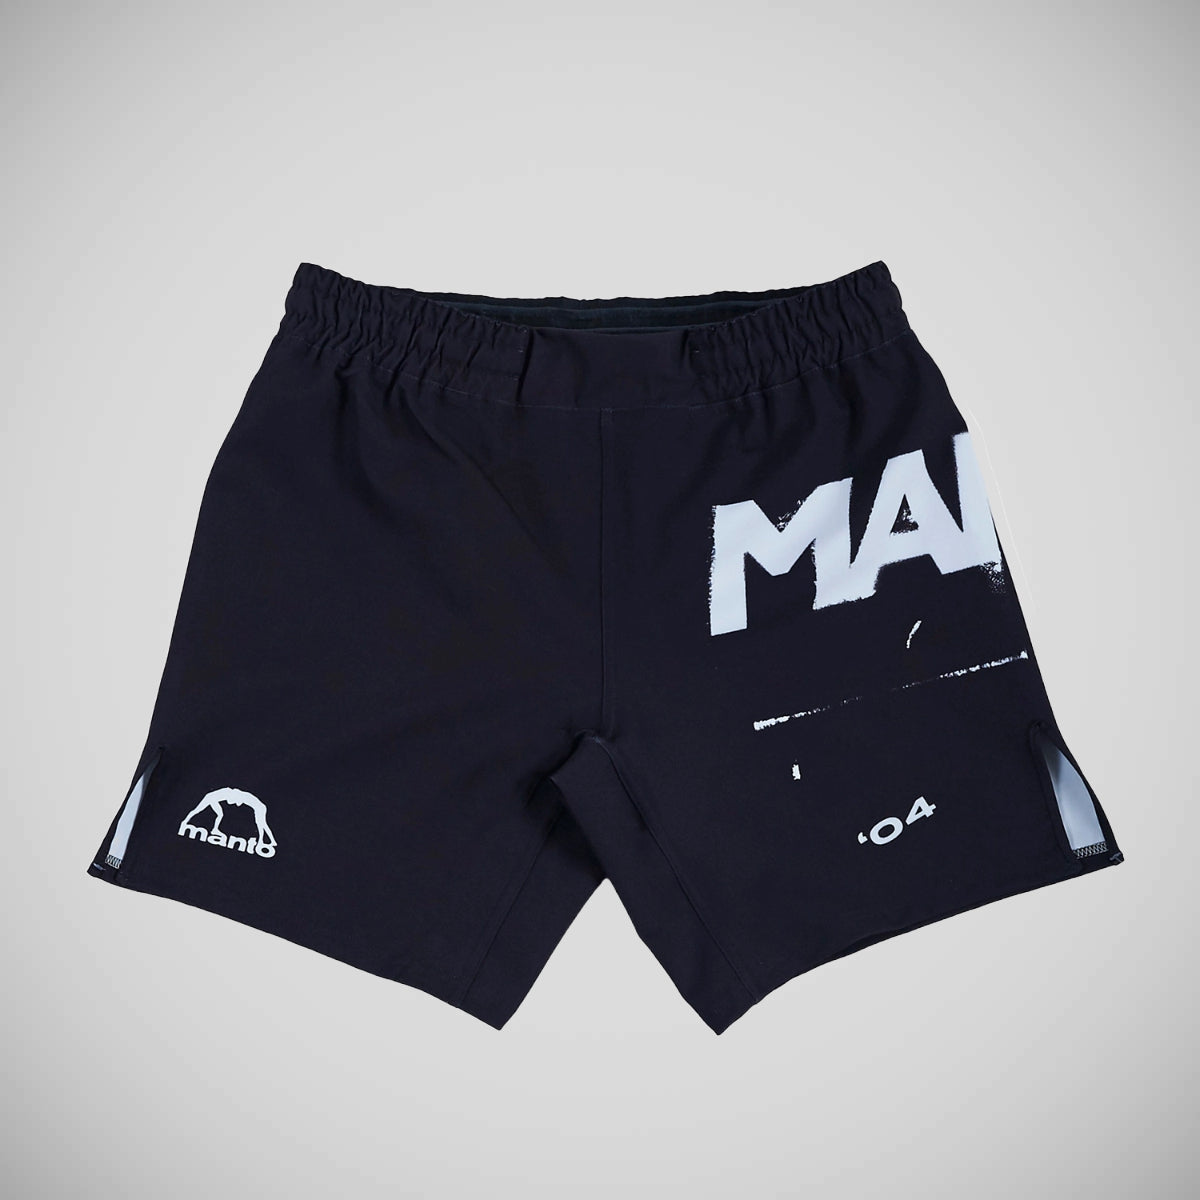 Manto Jiu Jitsu Gi's, Shorts & Rashguards for No Gi from Made4Fighters